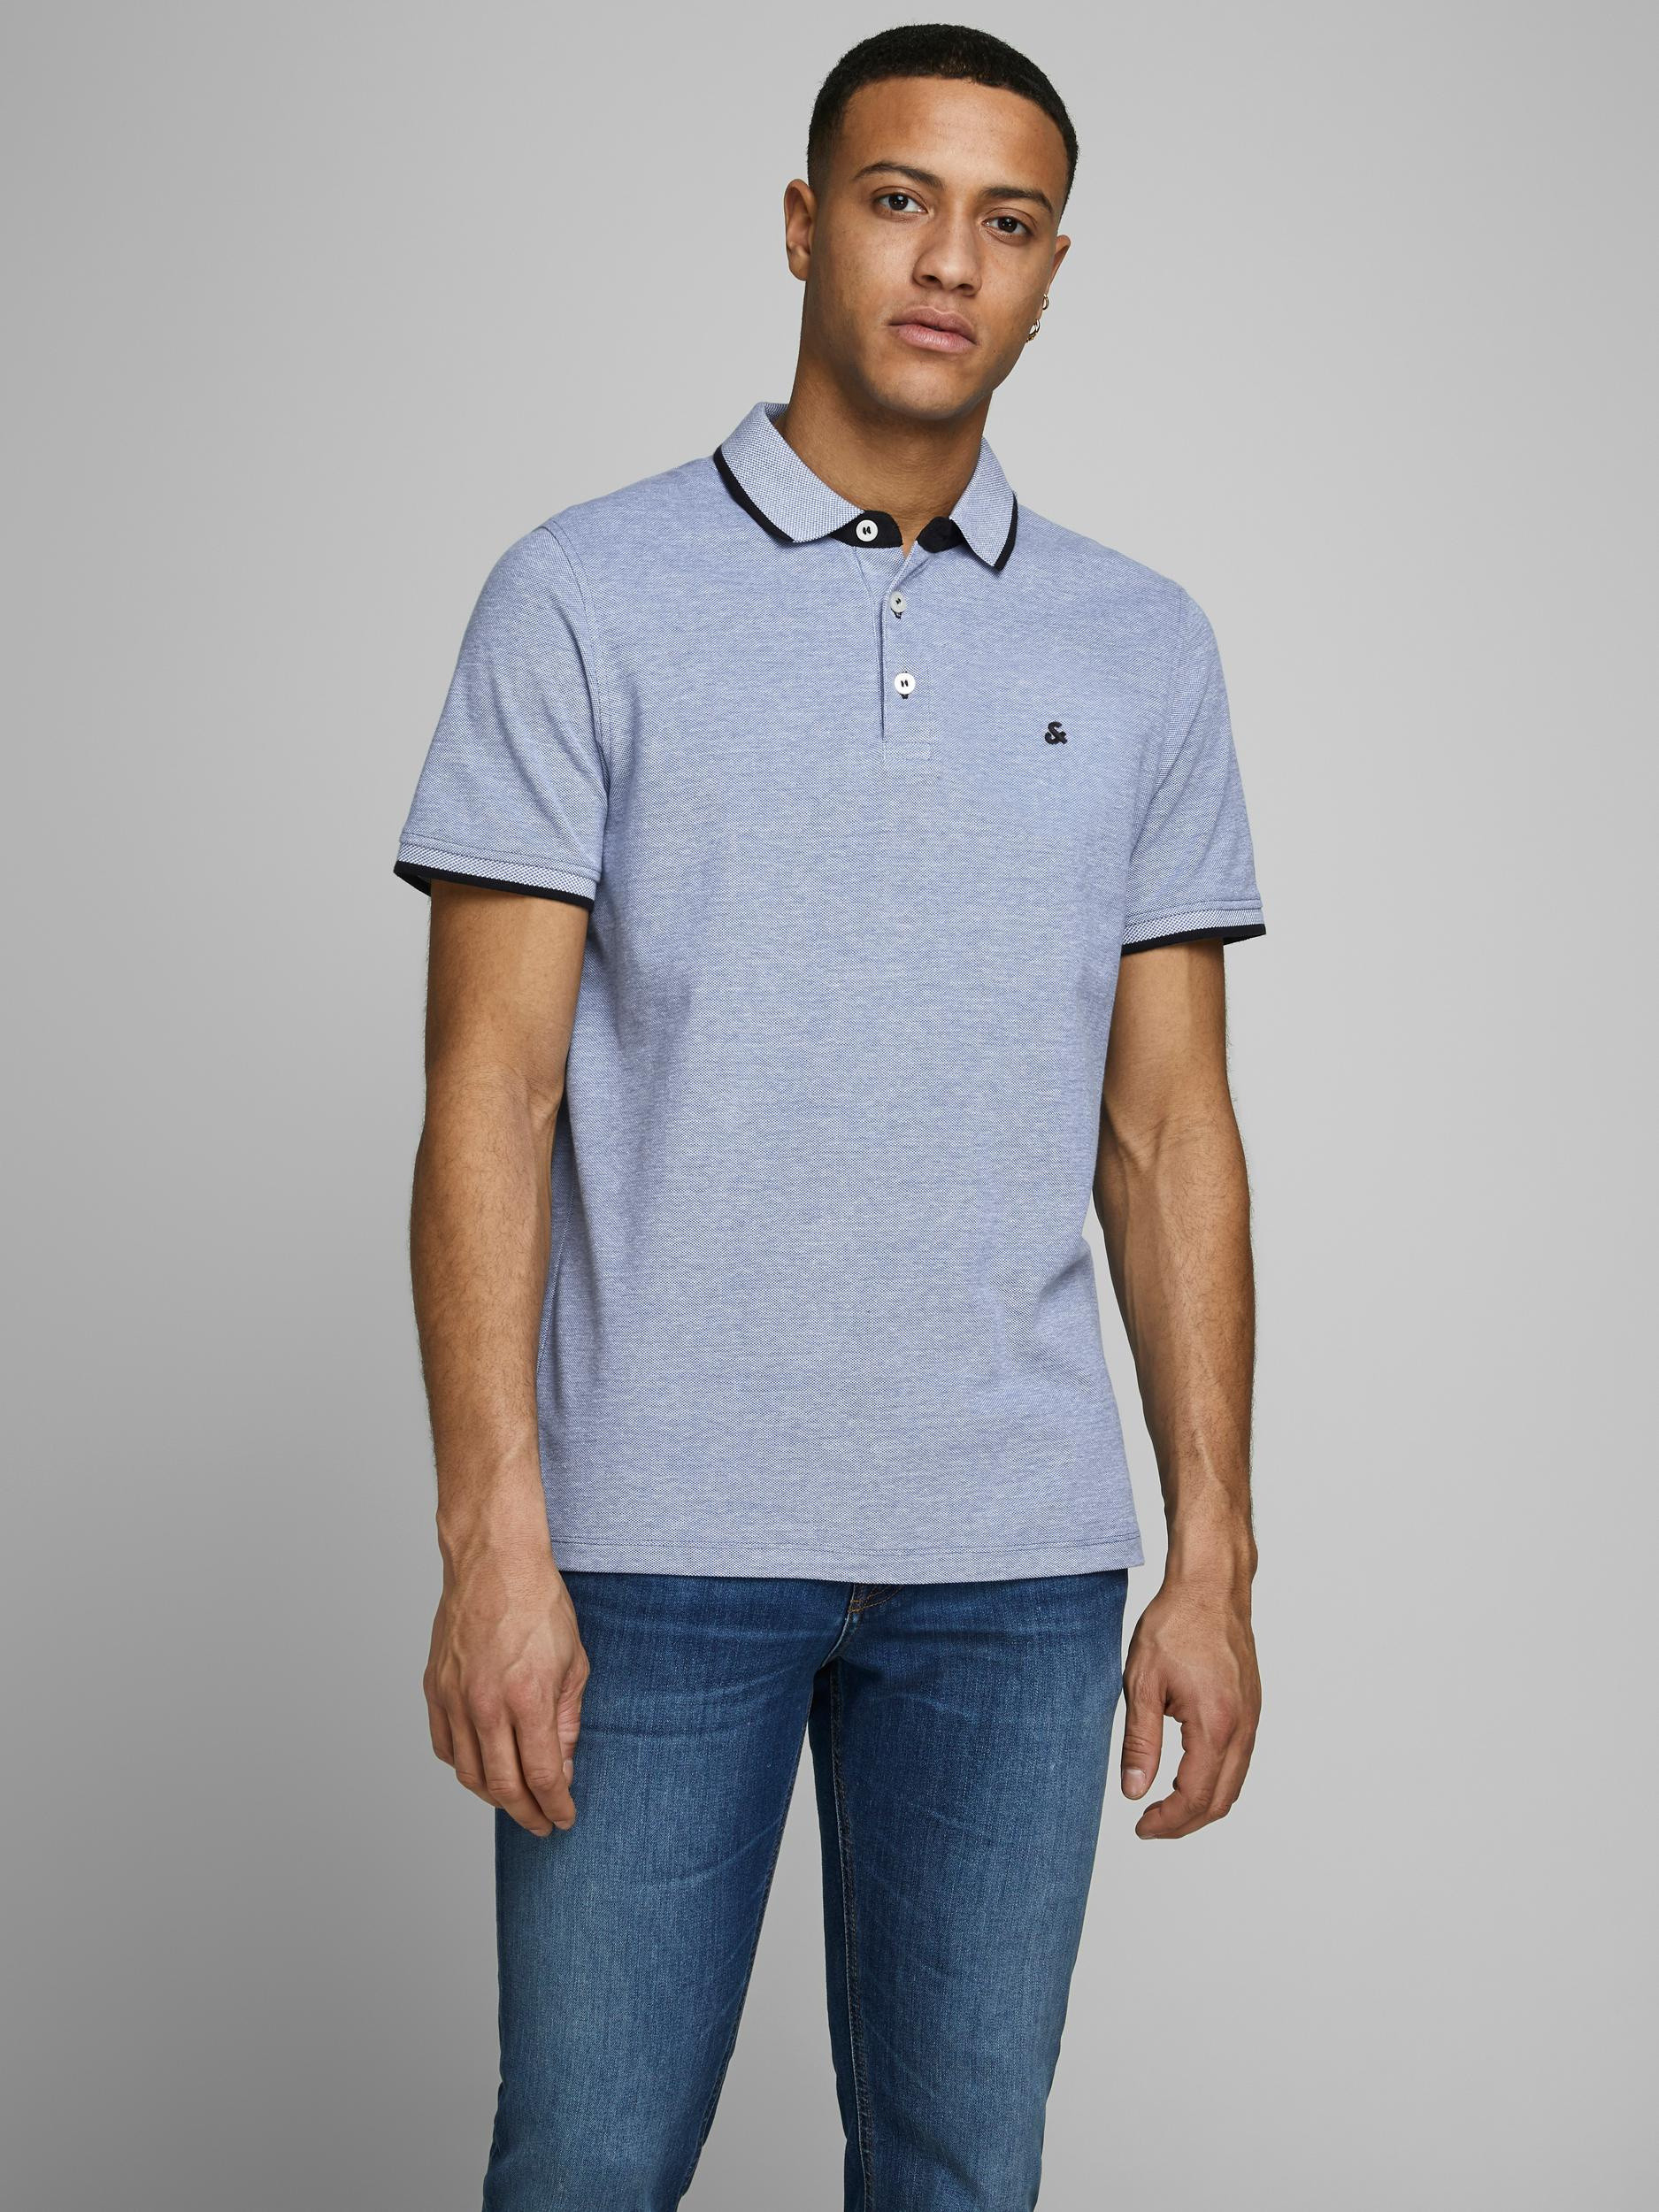 Jack & Jones - Slim fit polo shirt in cotton, Light Blue, large image number 3